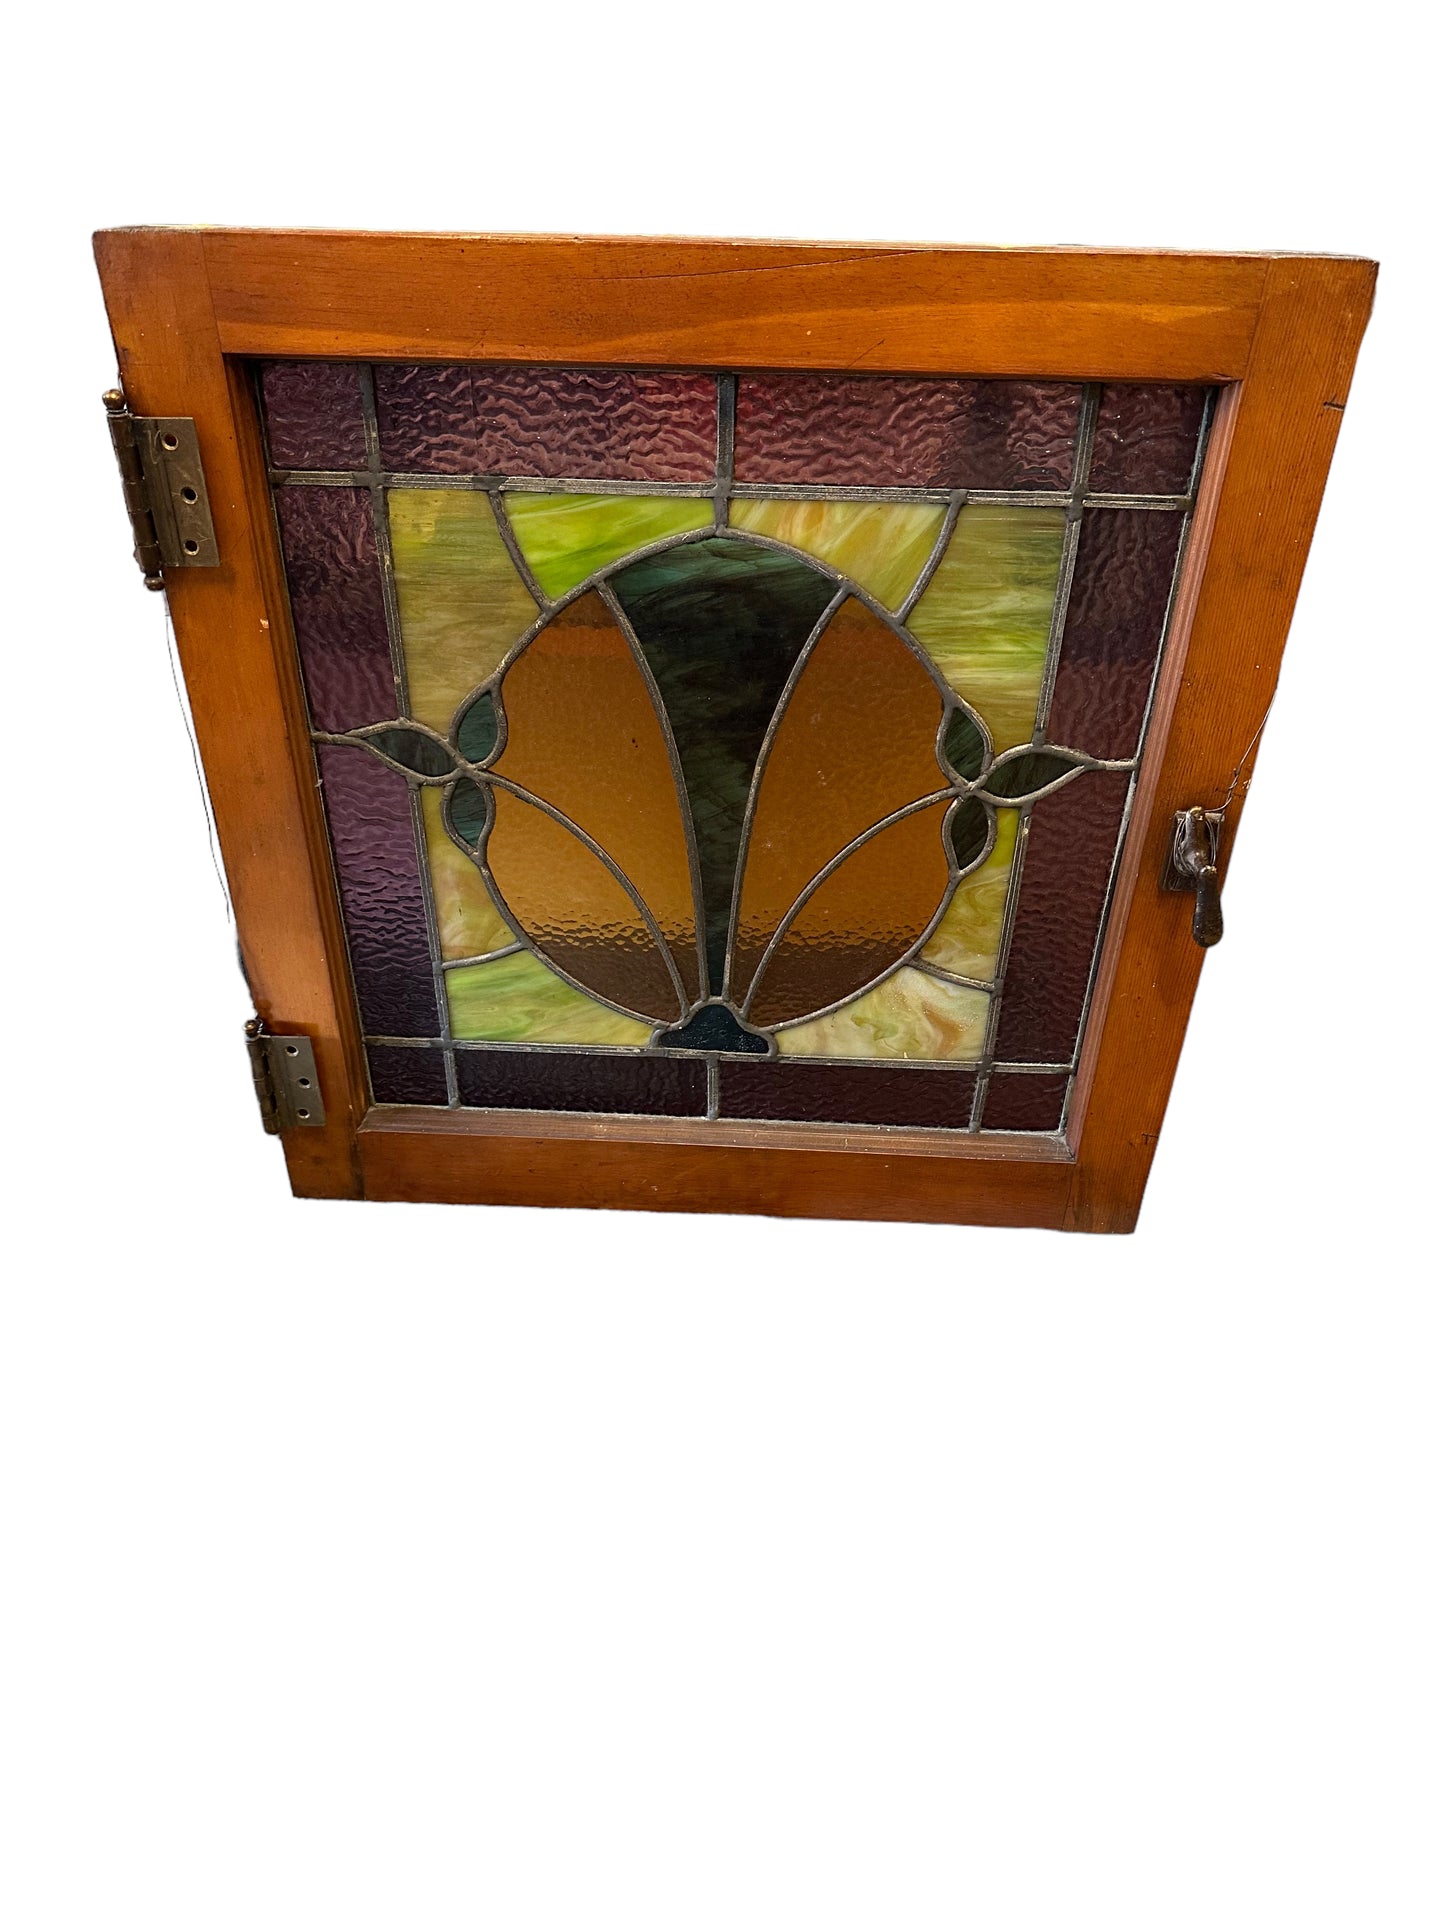 Antique Framed Art Nouveau Stained Glass Suncatcher Window w/ Original Hardware & Lock